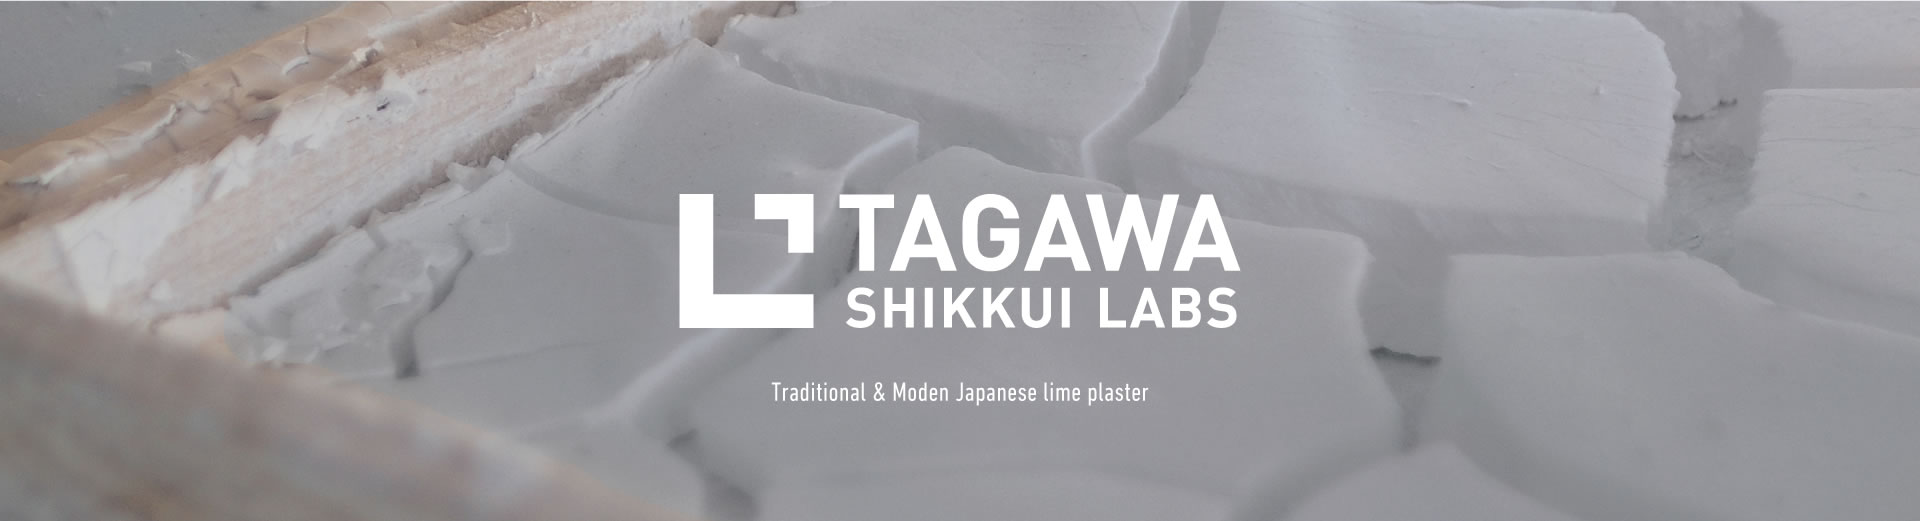 TAGAWA SHIKKUI LABS